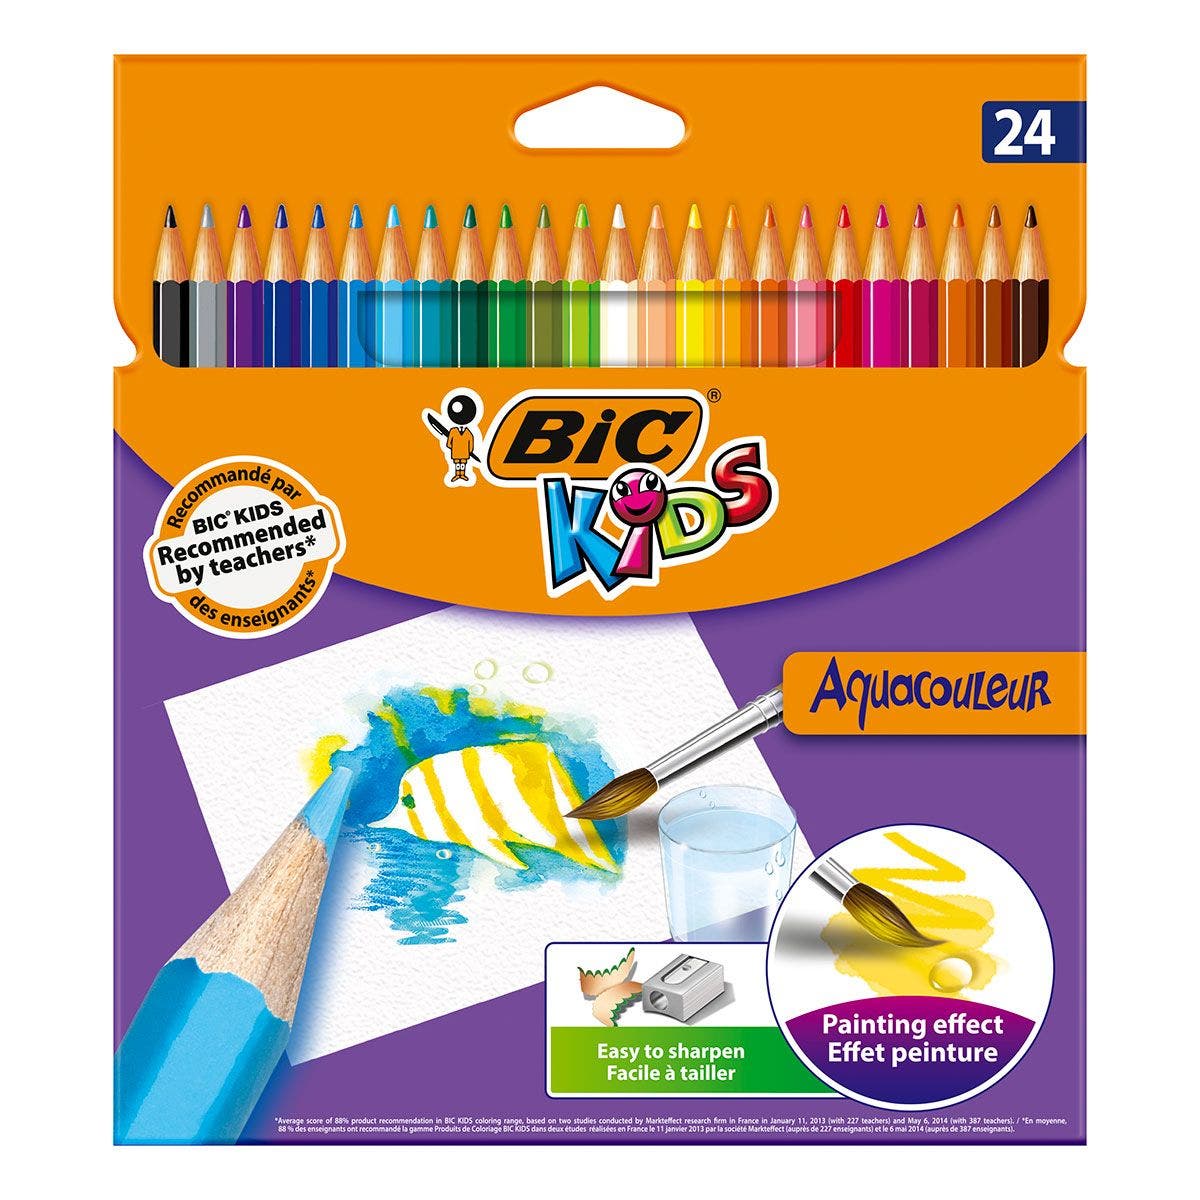 BIC Kids Crayons de Couleur x36